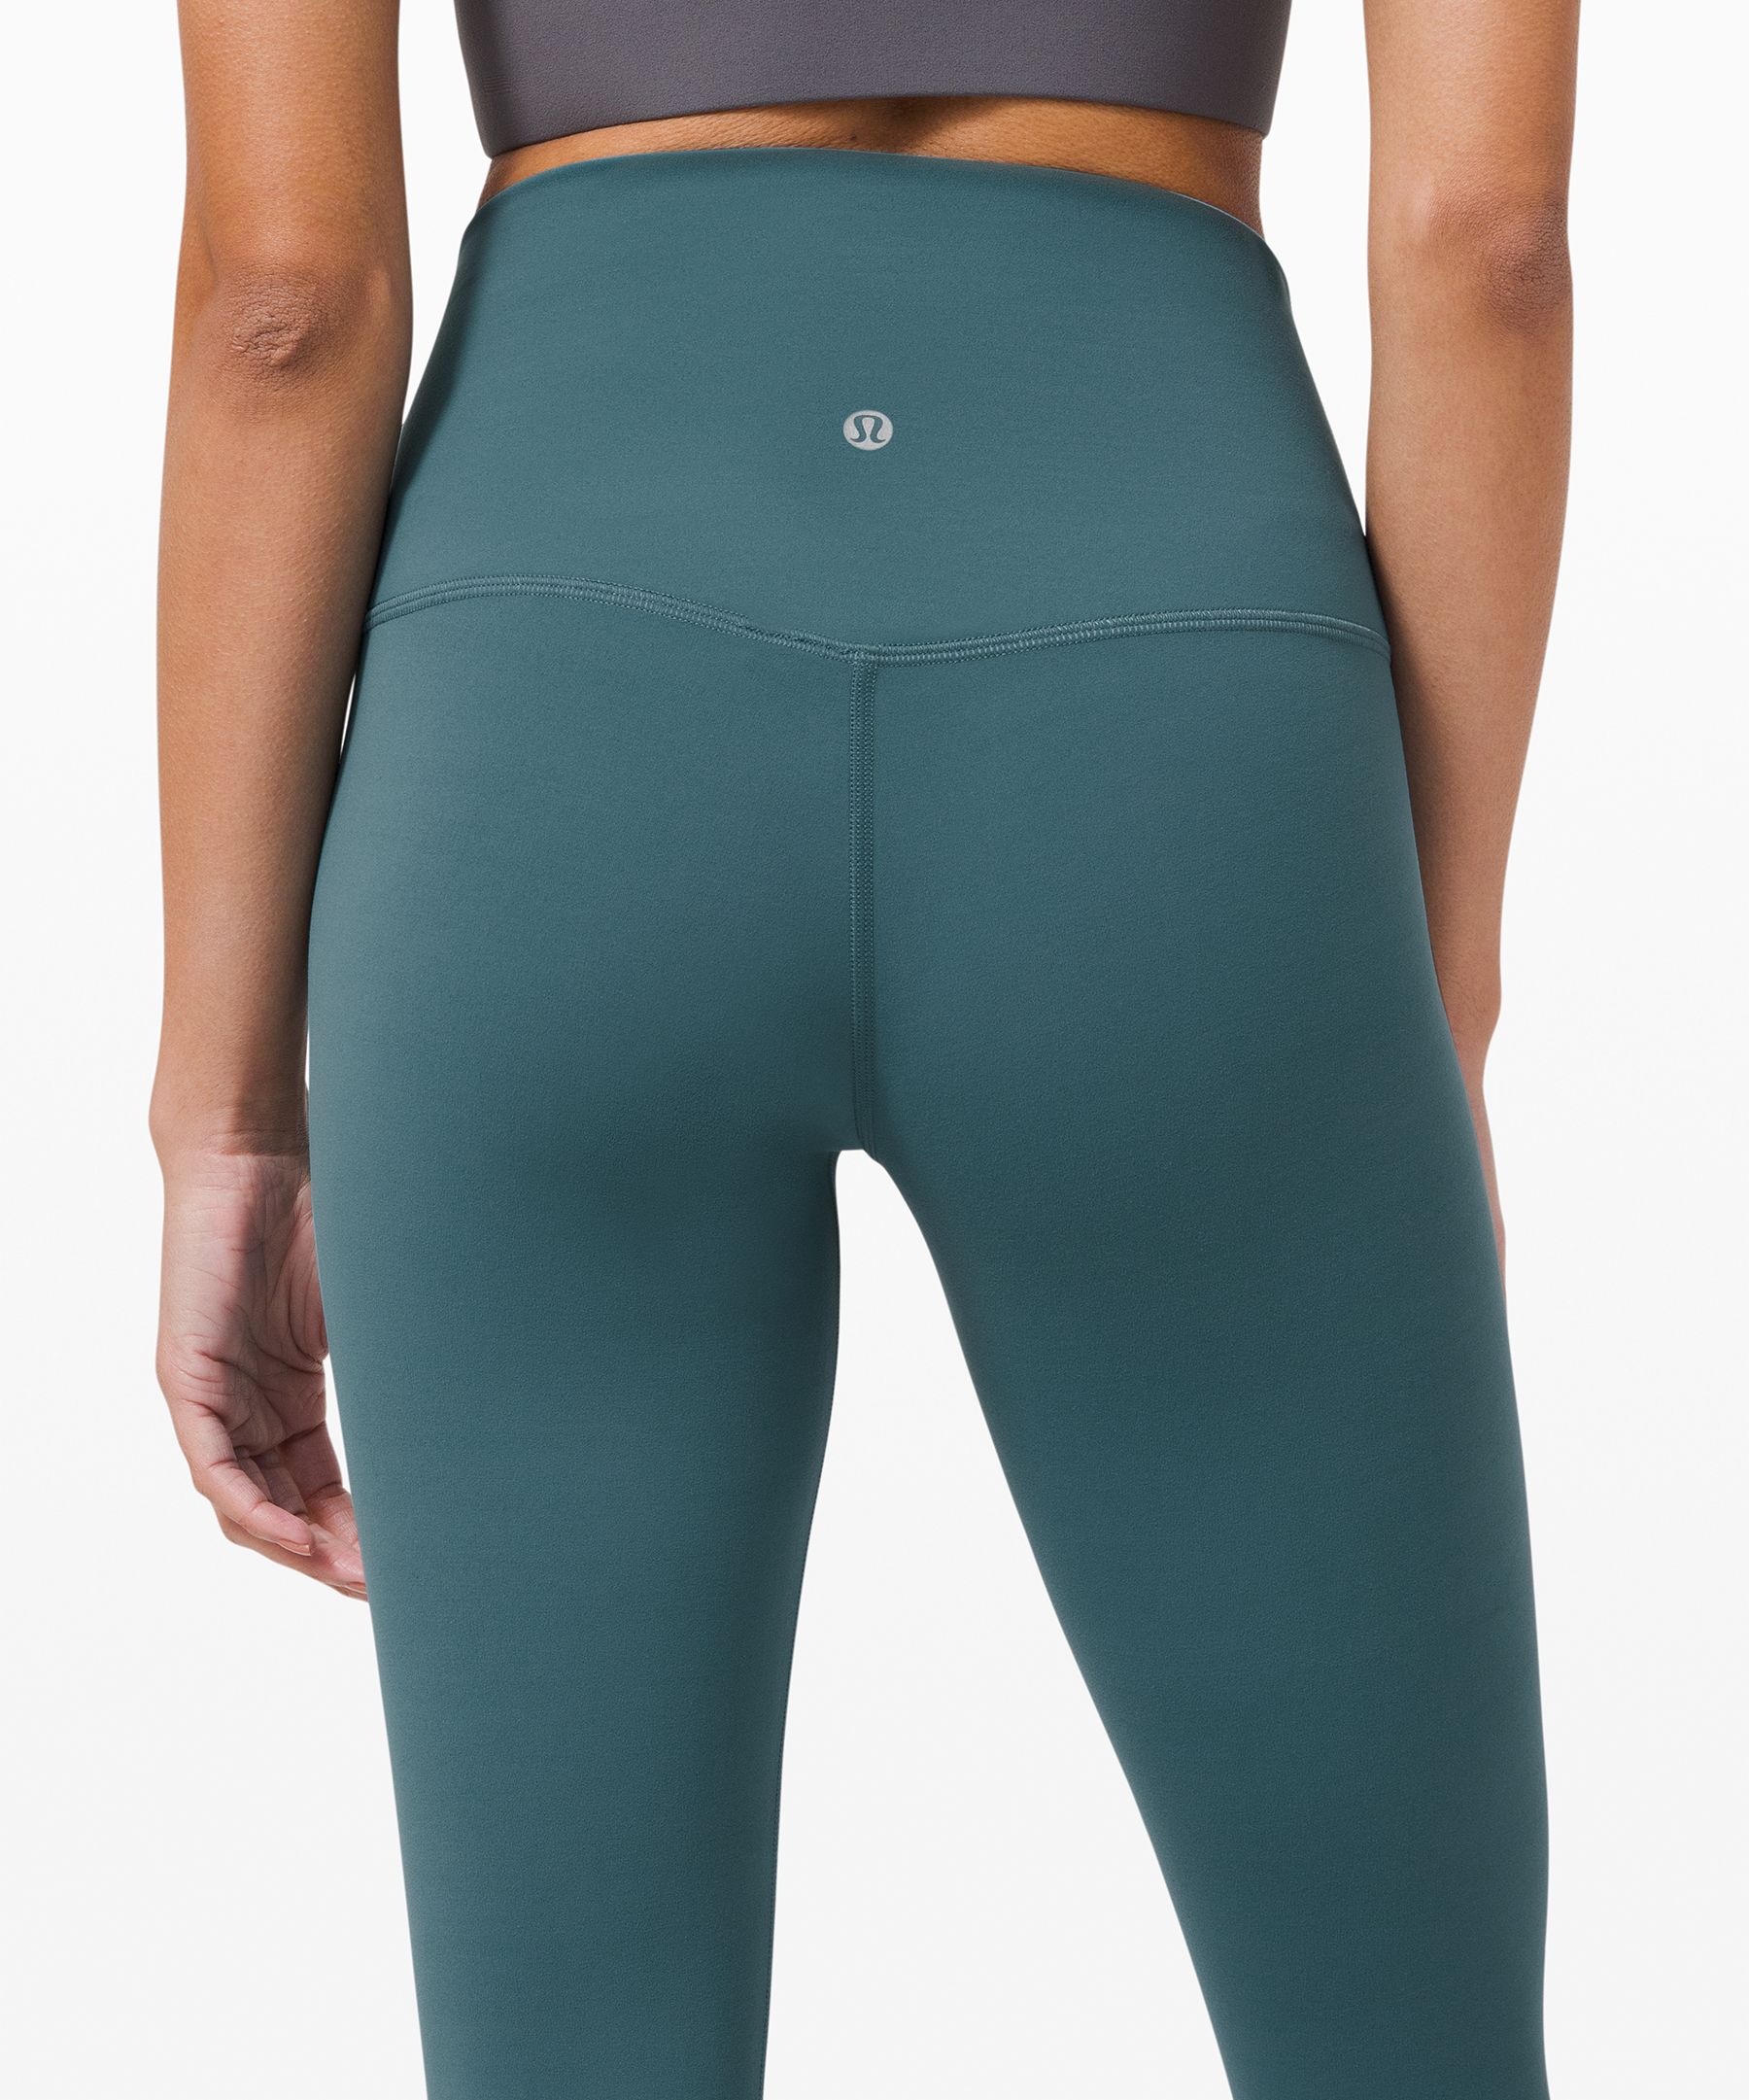 Stylish Lululemon Green Align HR Pants